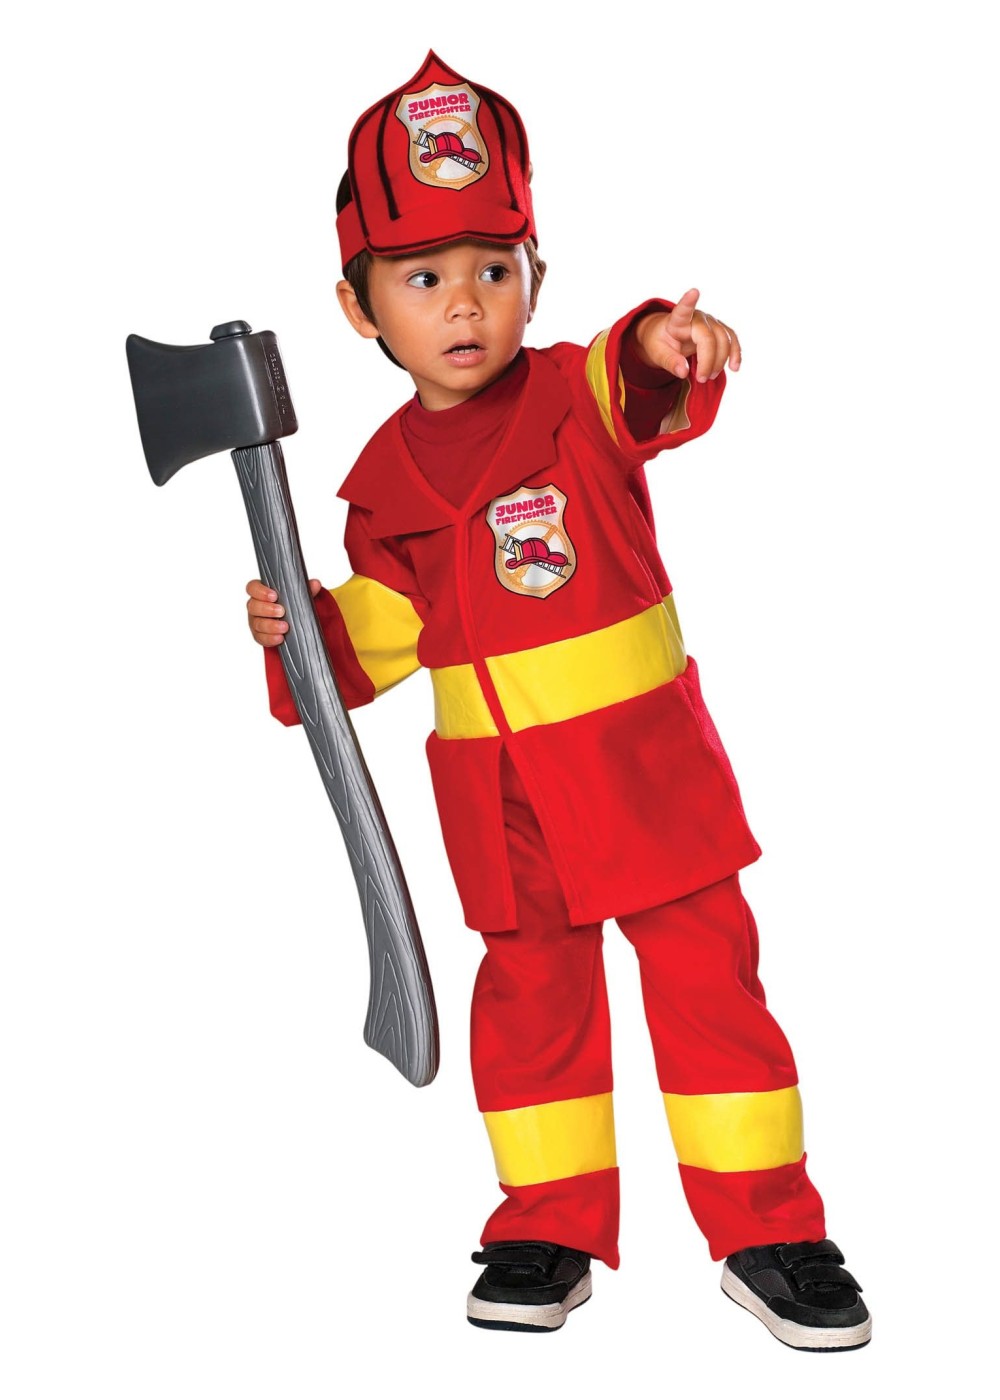 Junior Firefighter Rescuer Costume